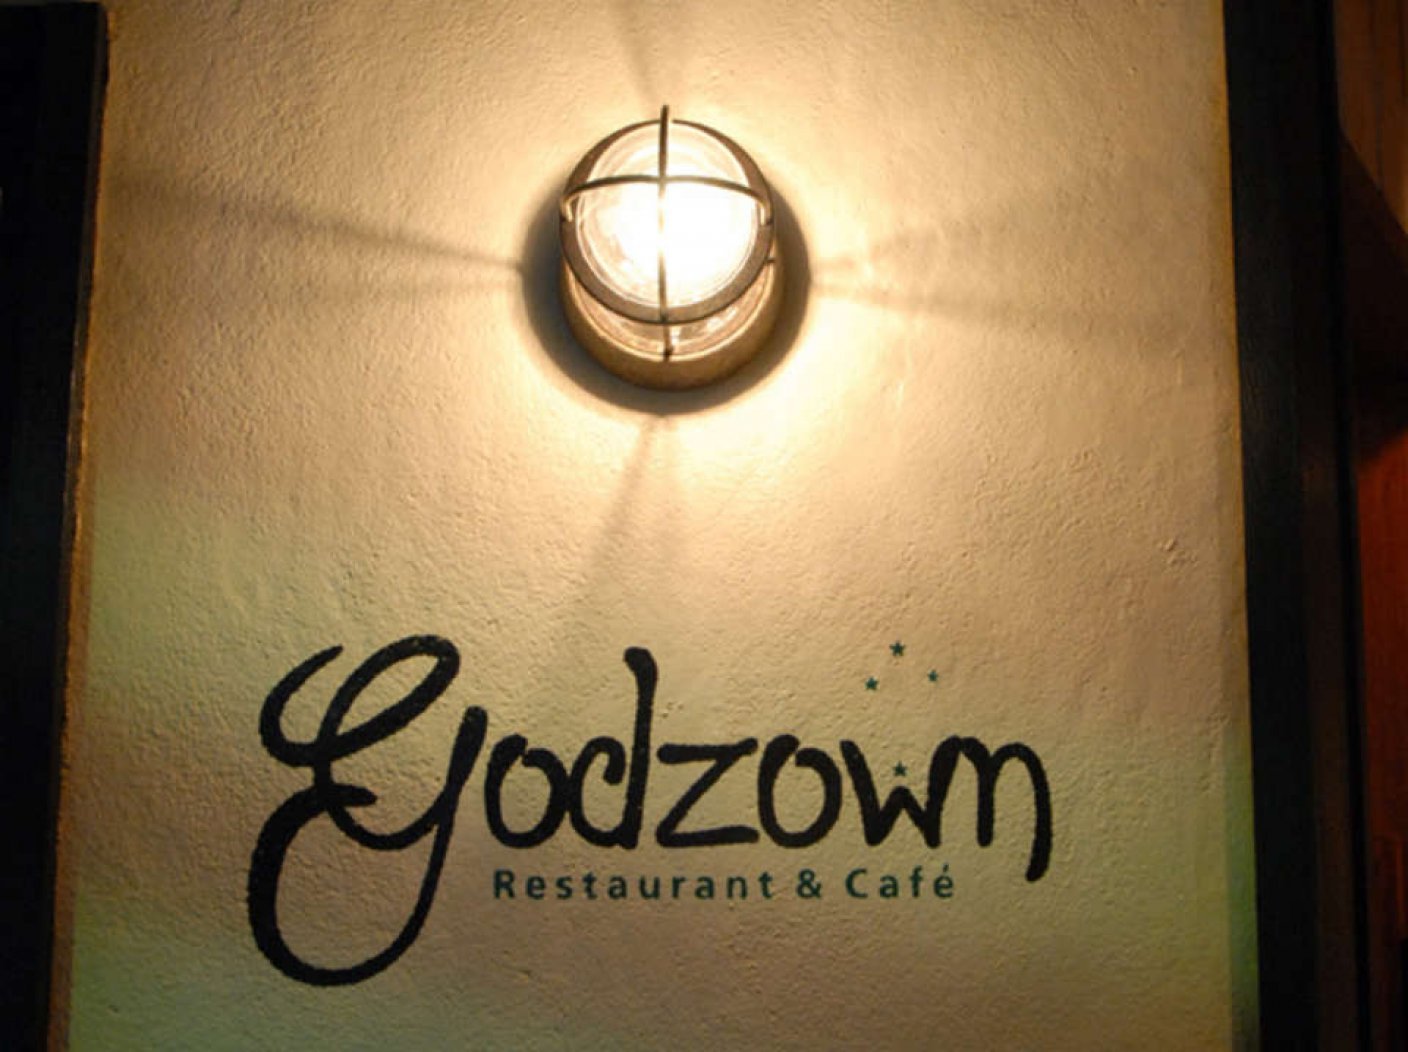 Godzown~NZ Restaurant & Cafe-の写真 6